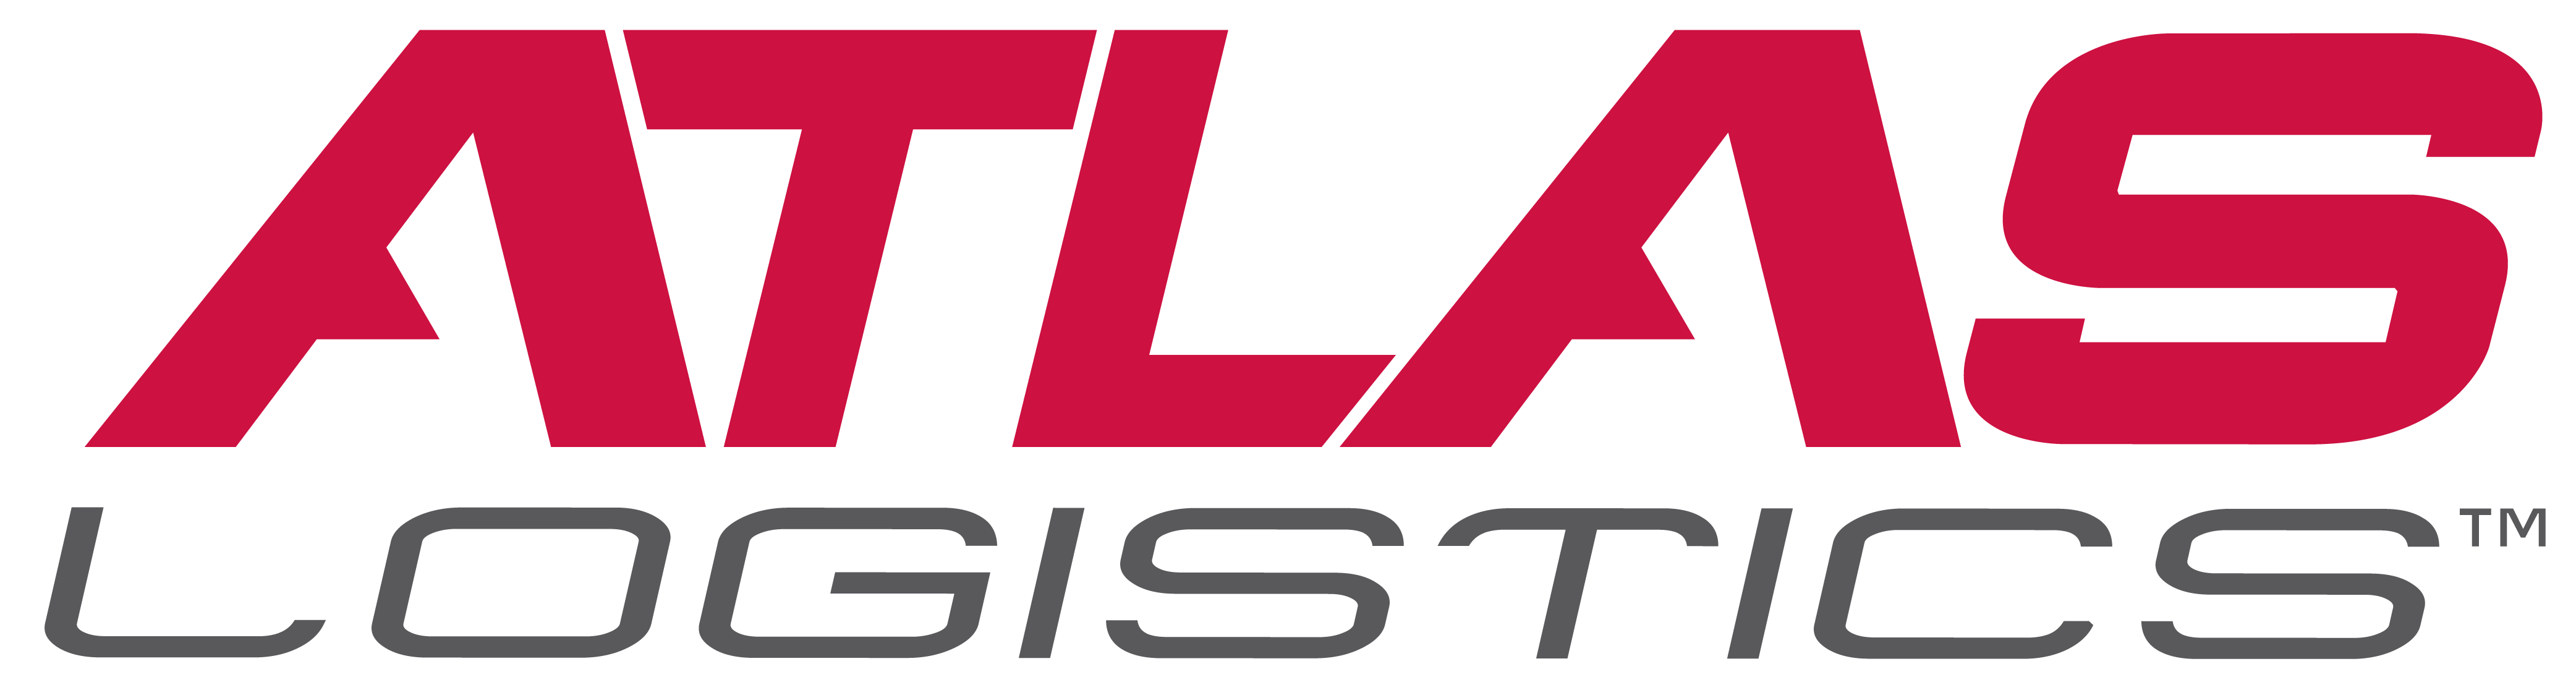 Atlas Logistcs